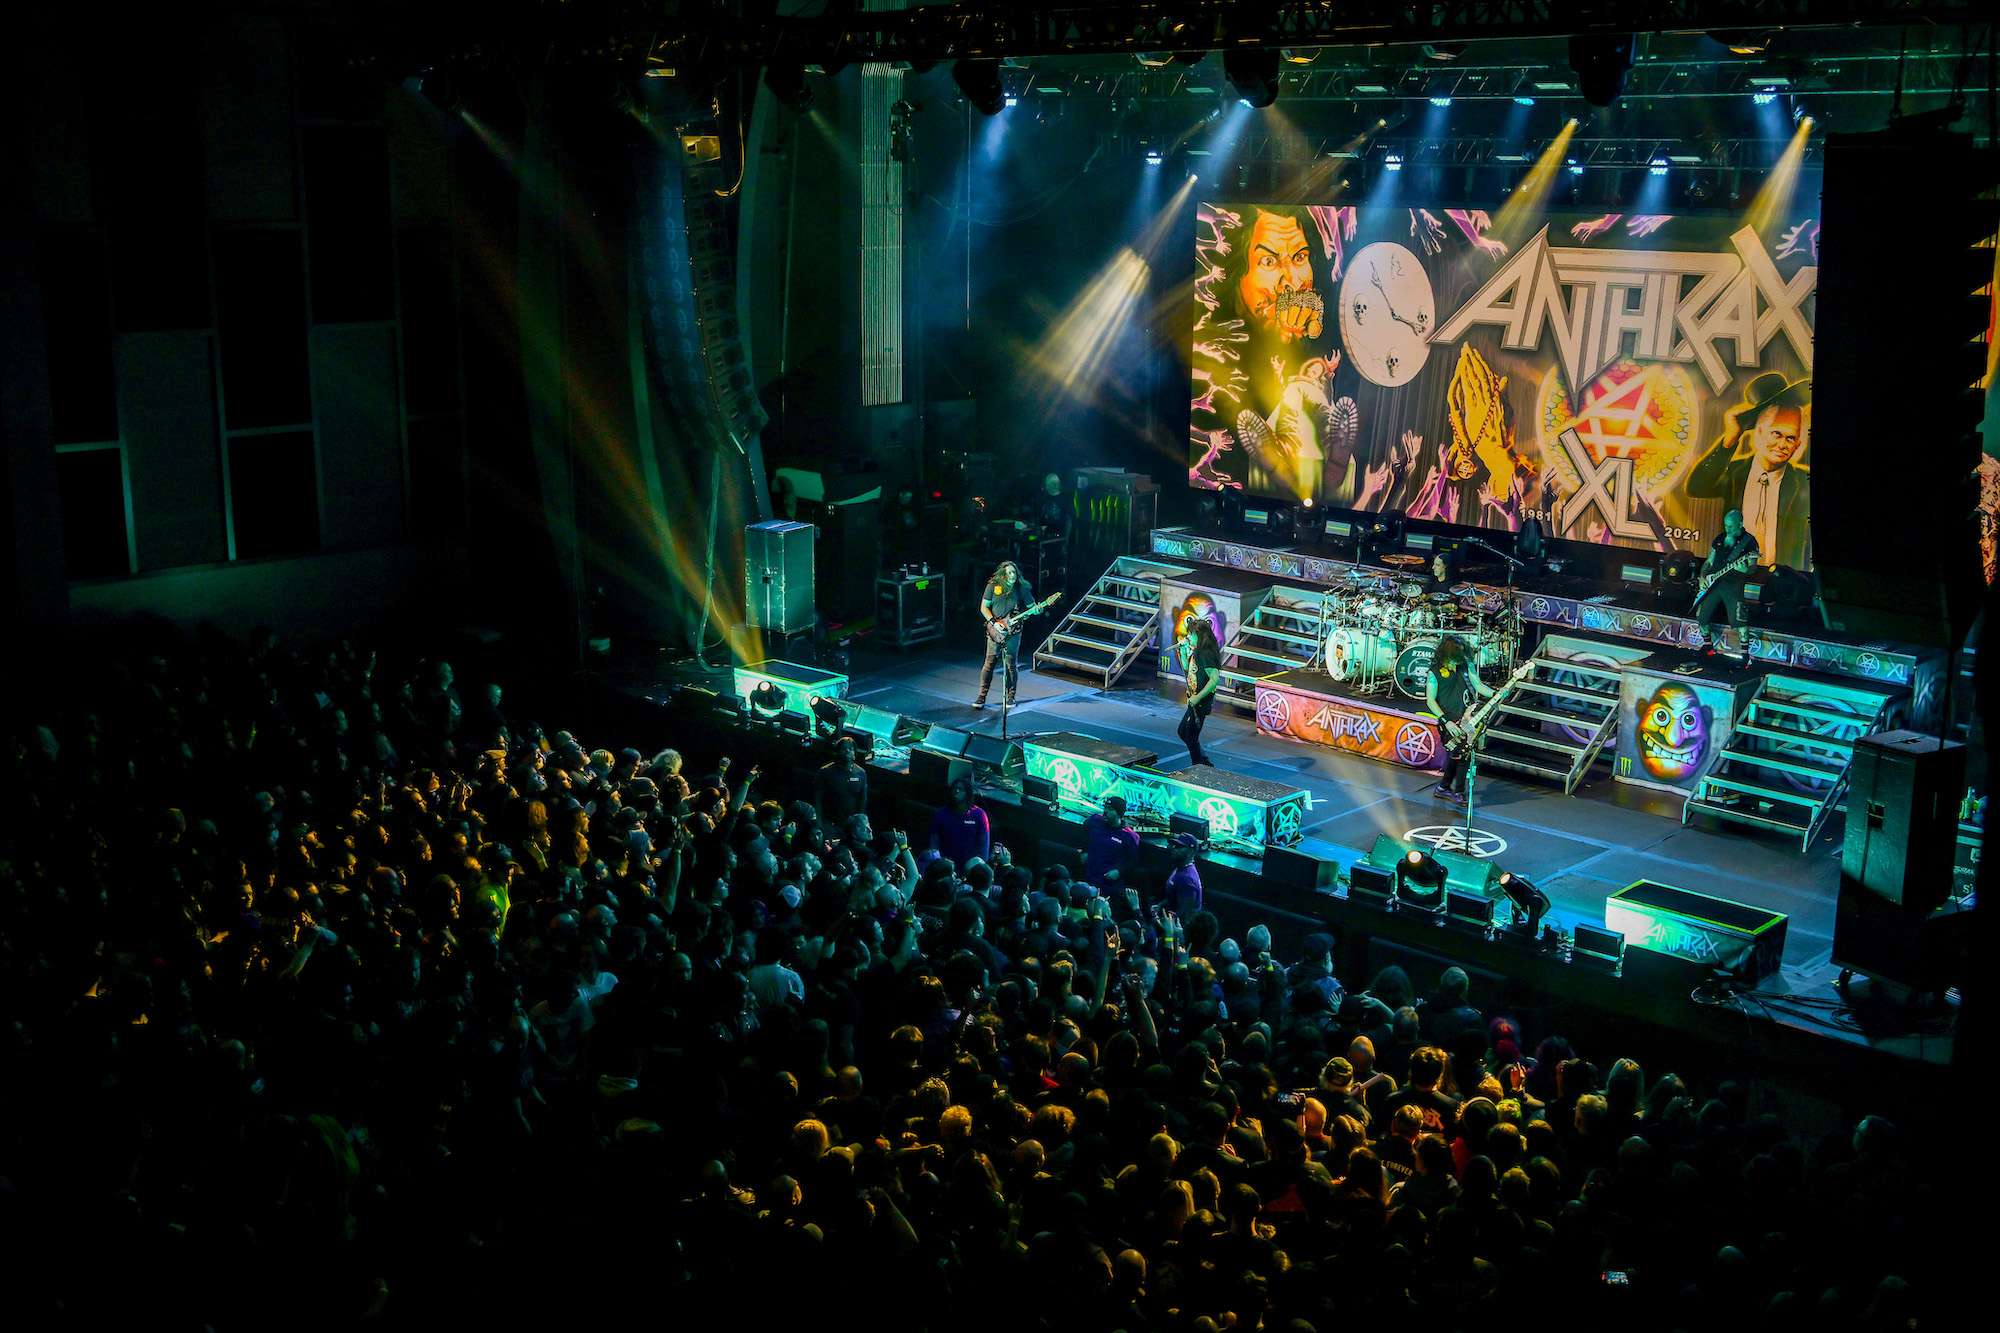 Anthrax Live at Radius [GALLERY] 21